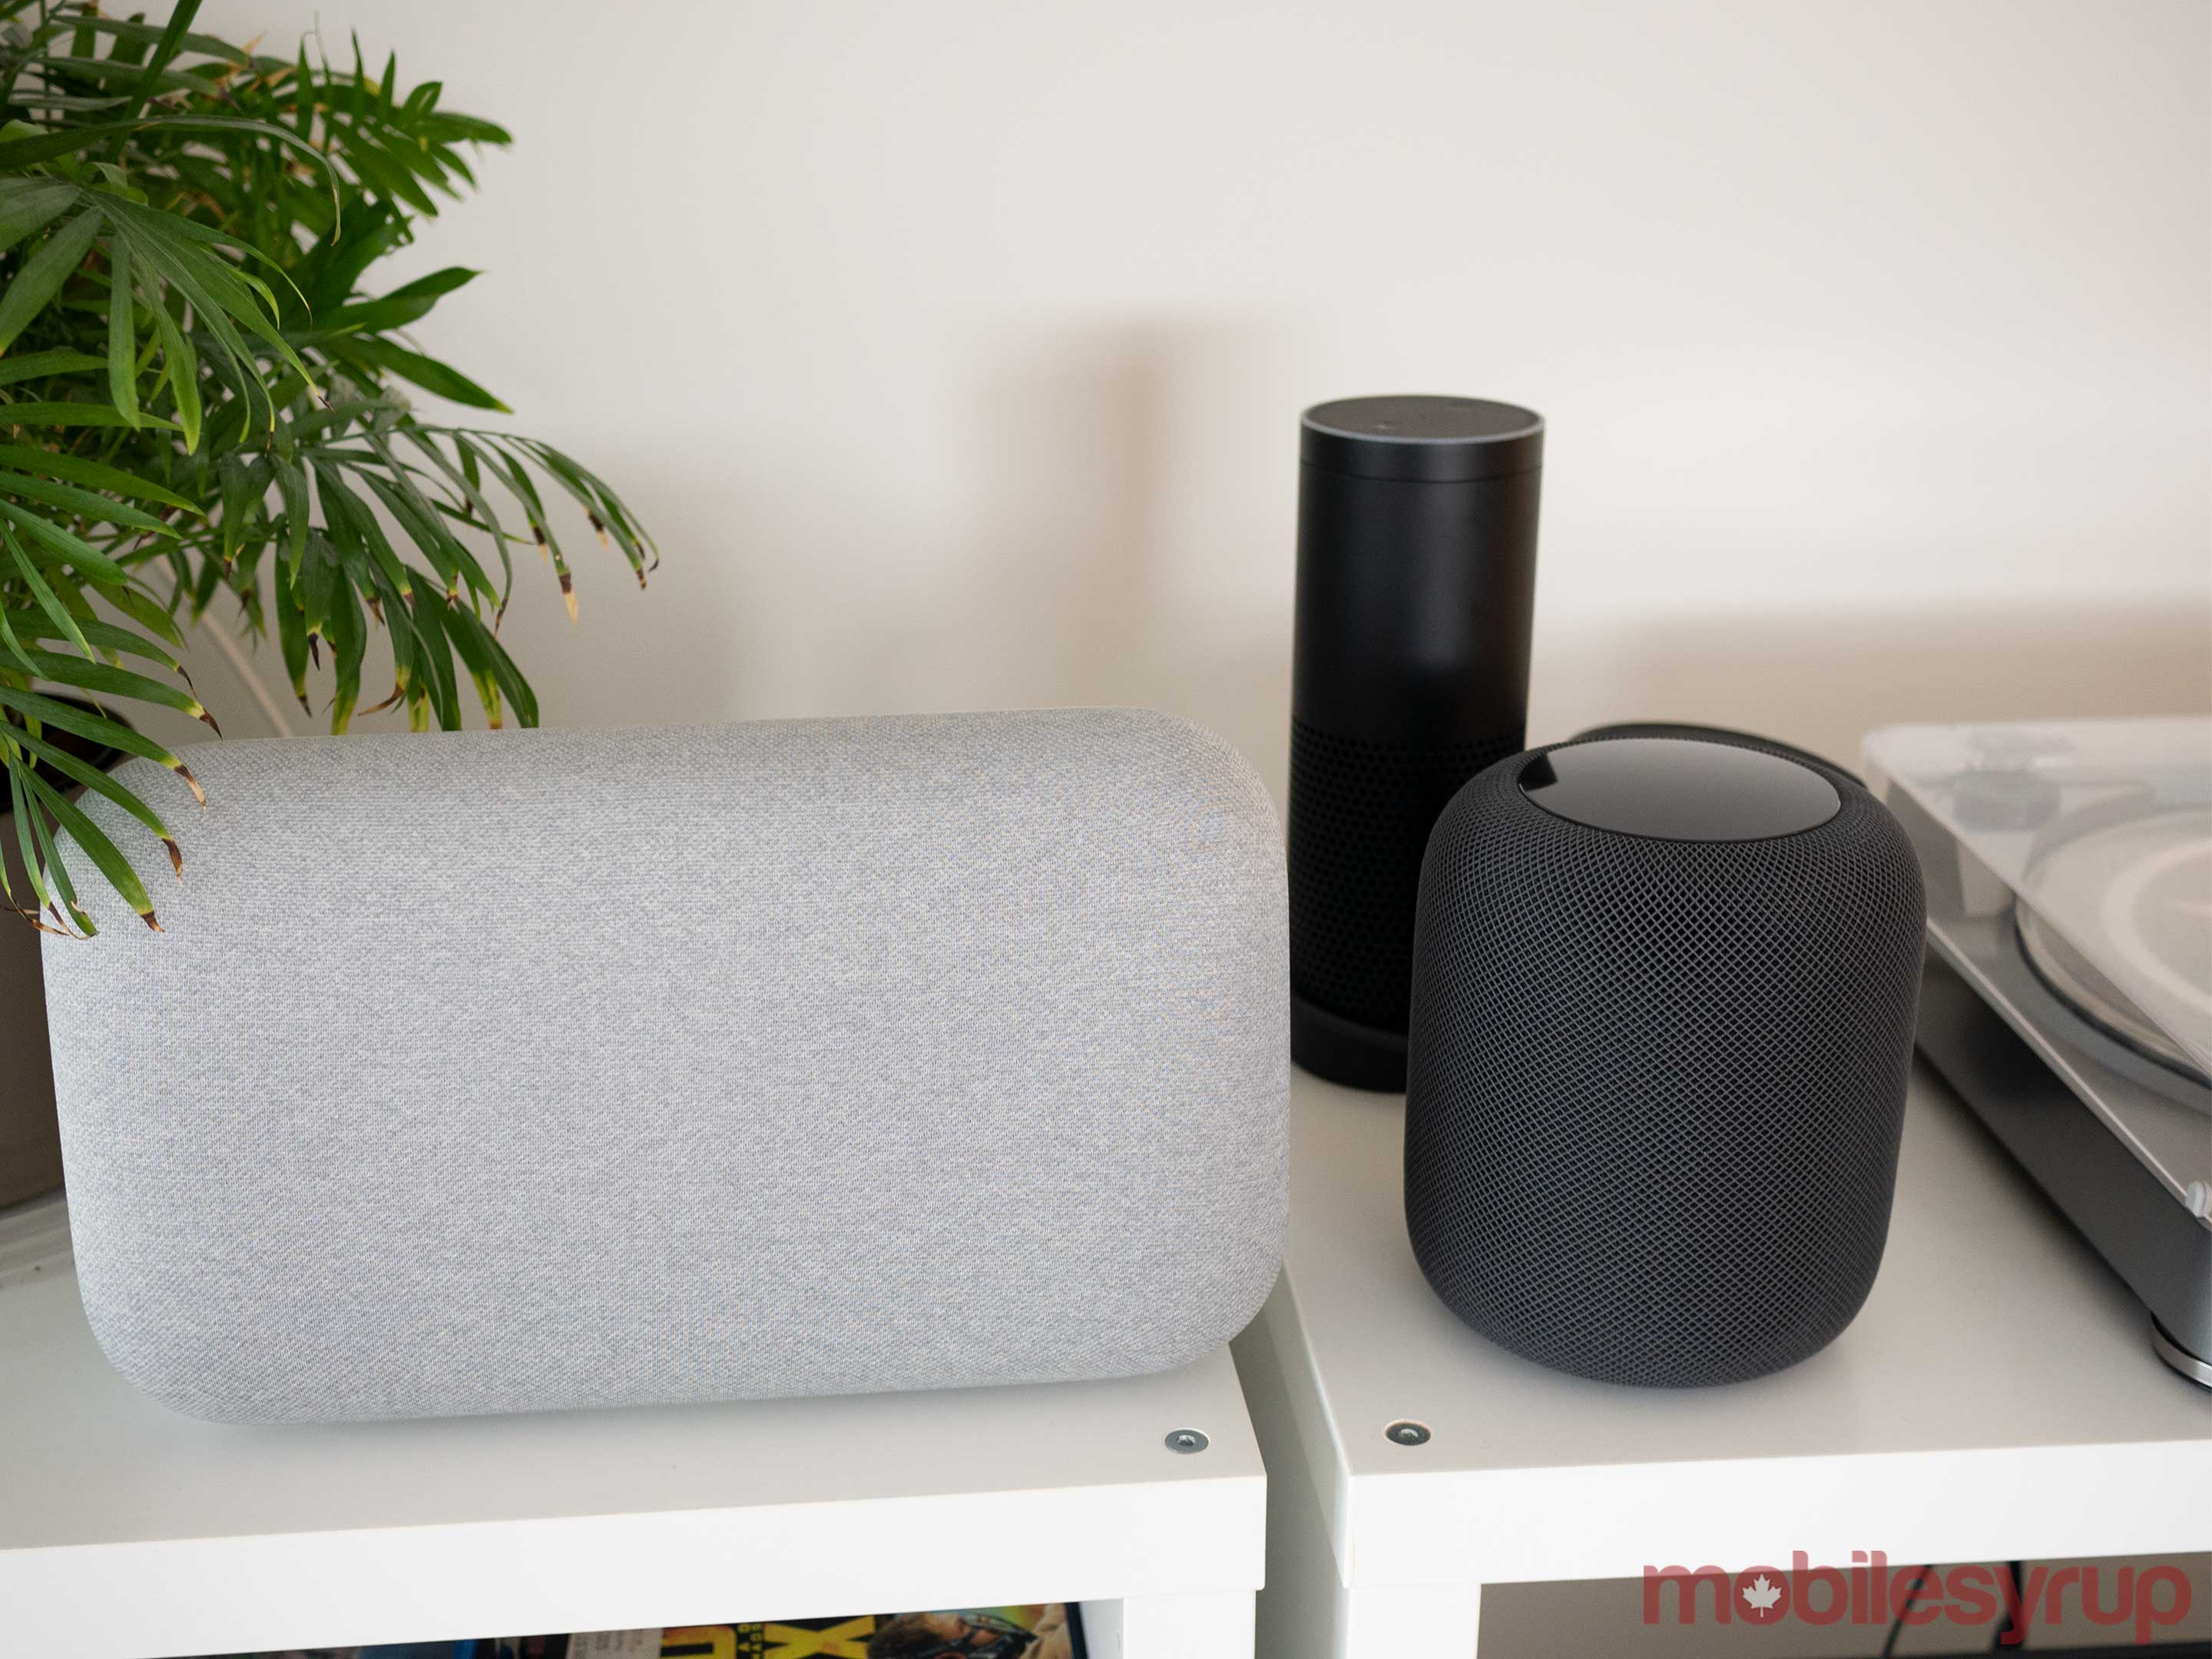 HomePod vs Amazon Echo vs Google Home Max